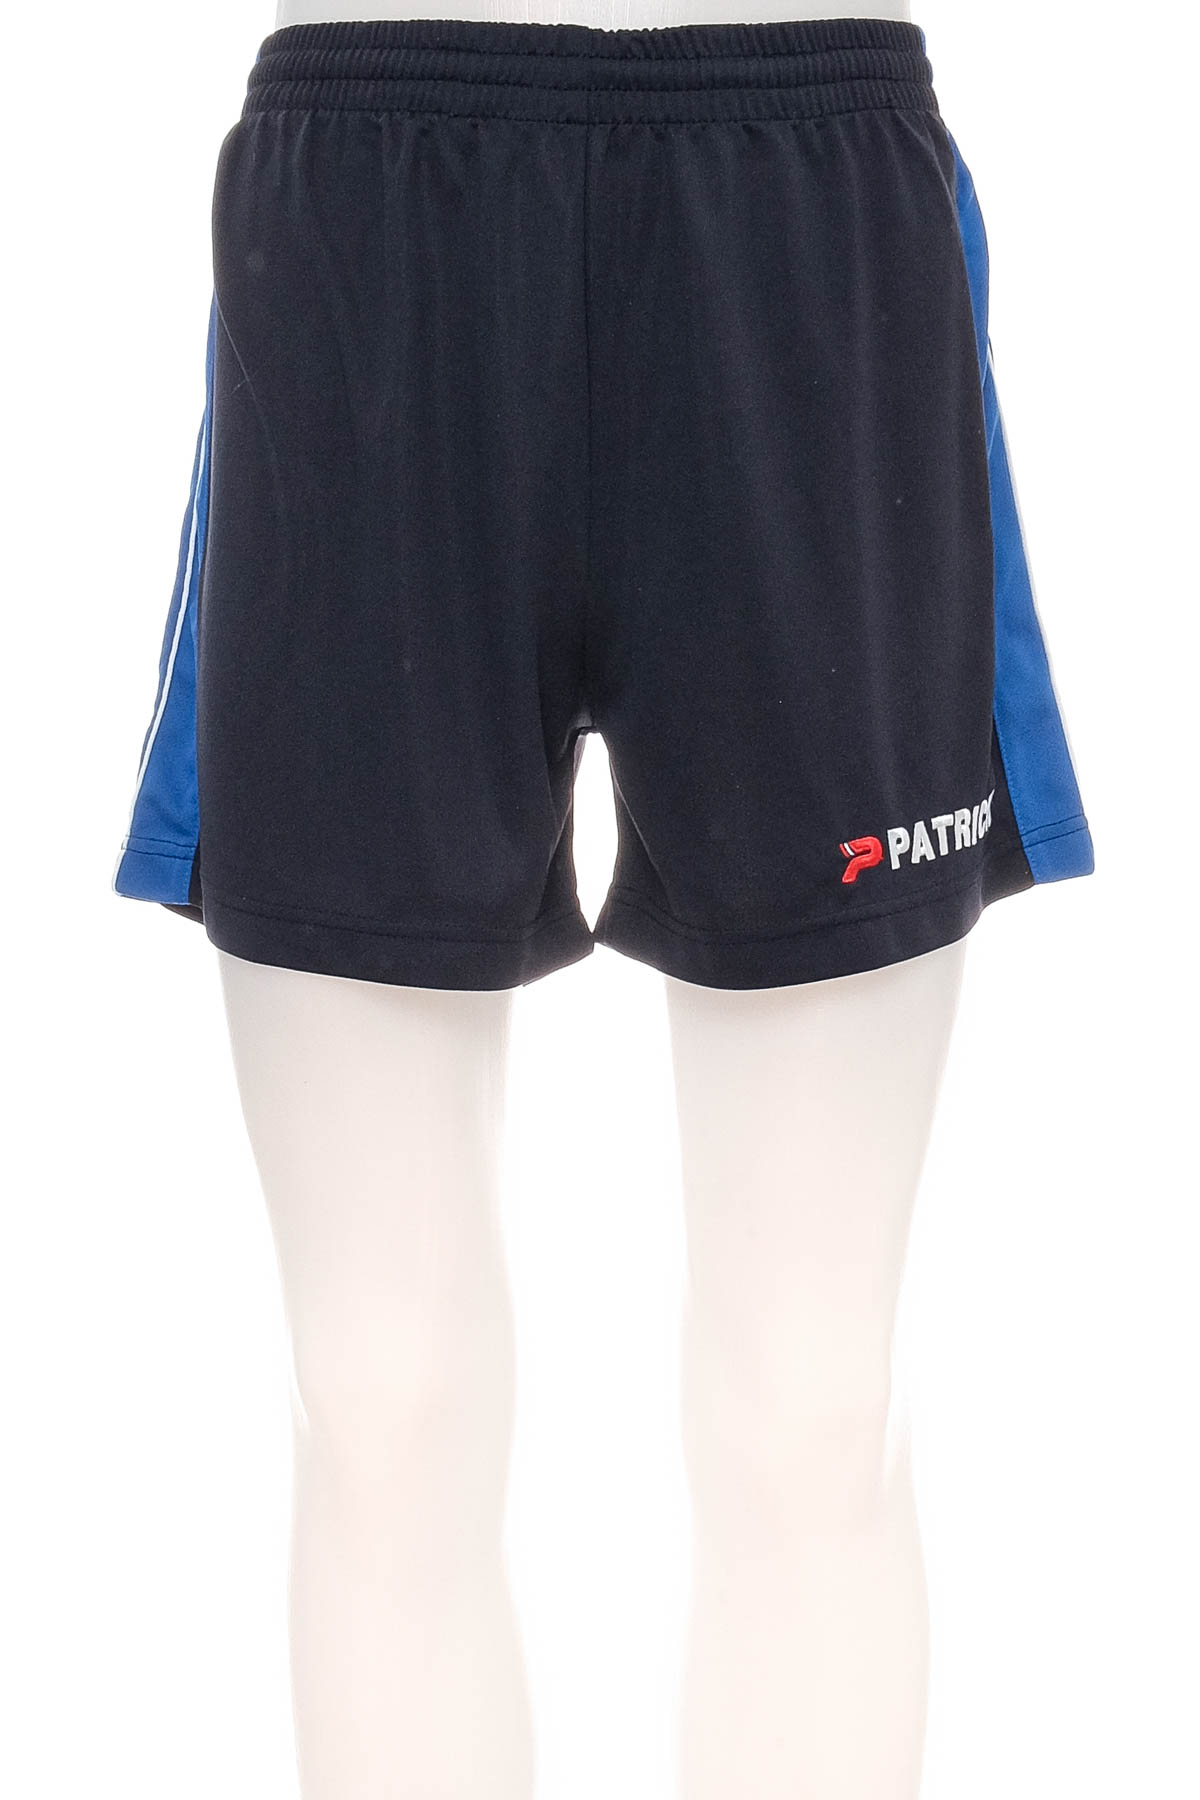 Men's shorts - PATRICK - 0